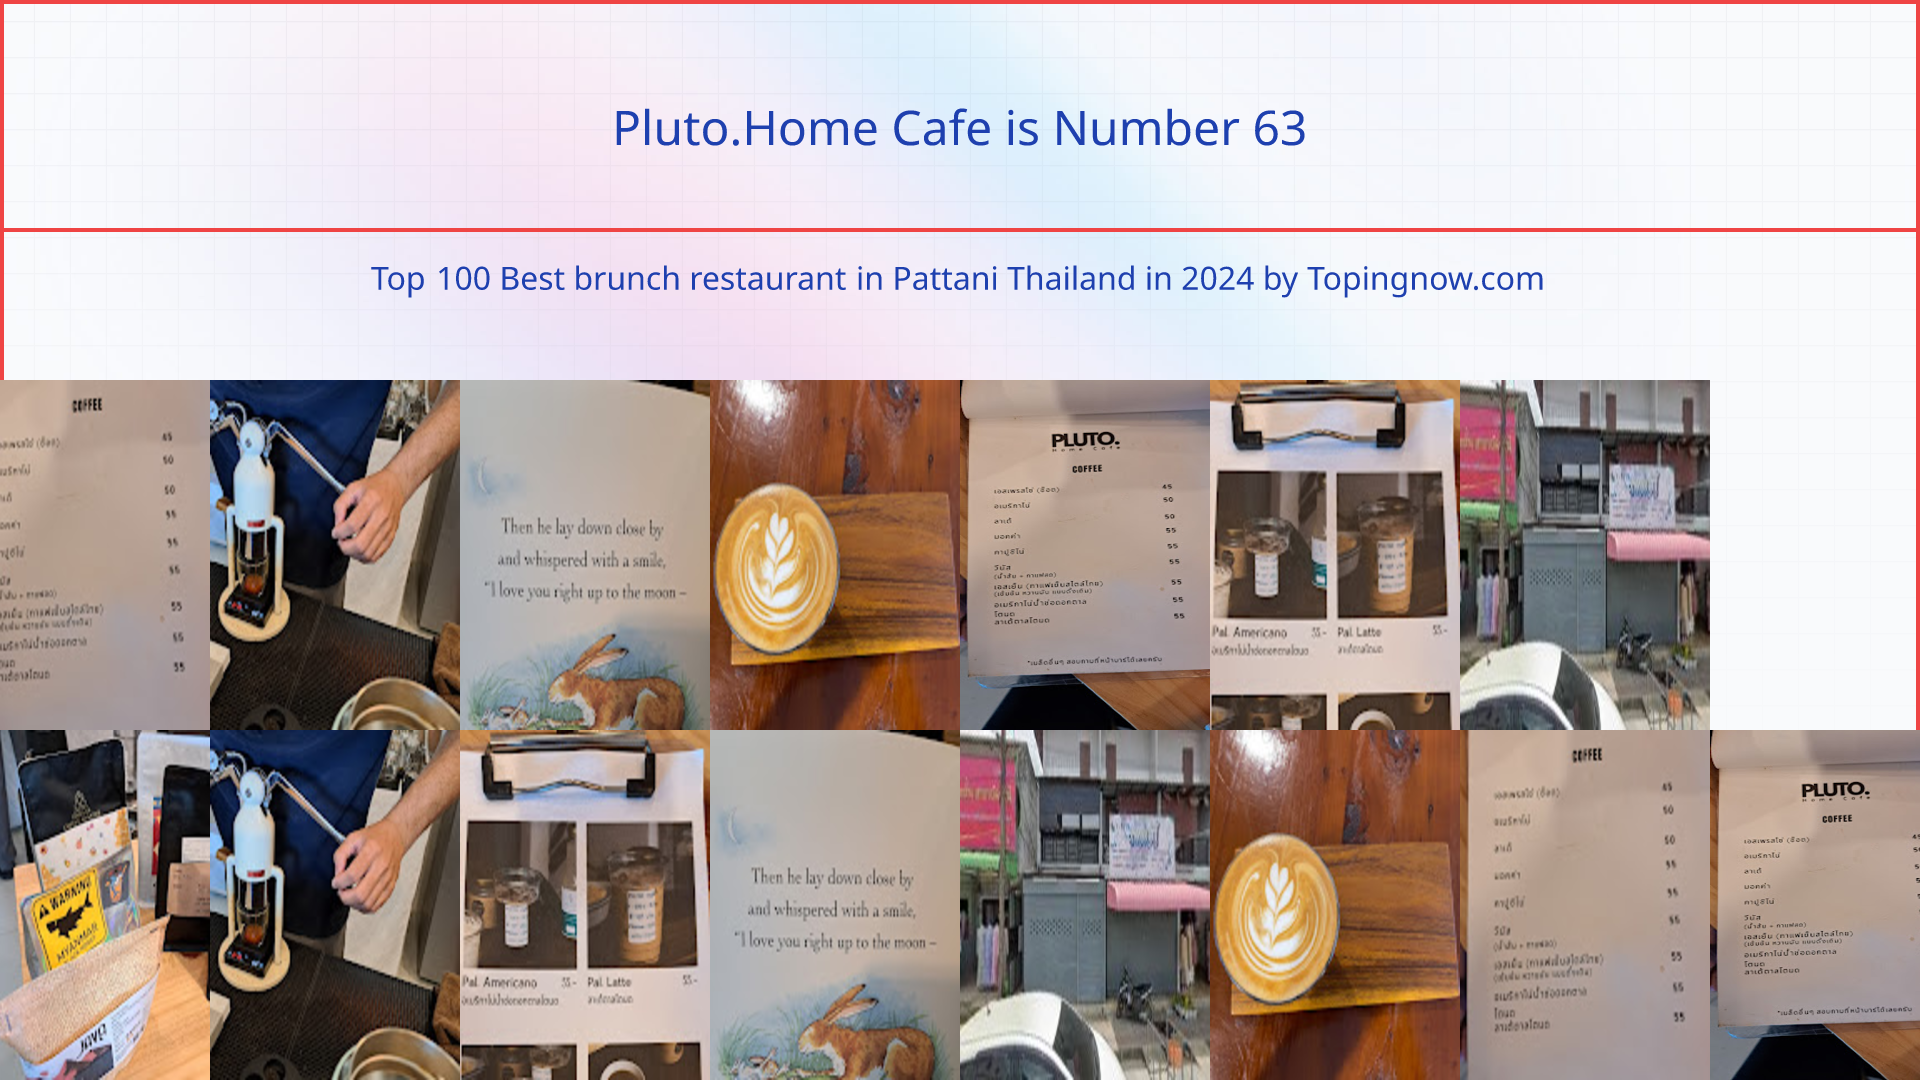 Pluto.Home Cafe: Top 100 Best brunch restaurant in Pattani Thailand in 2024